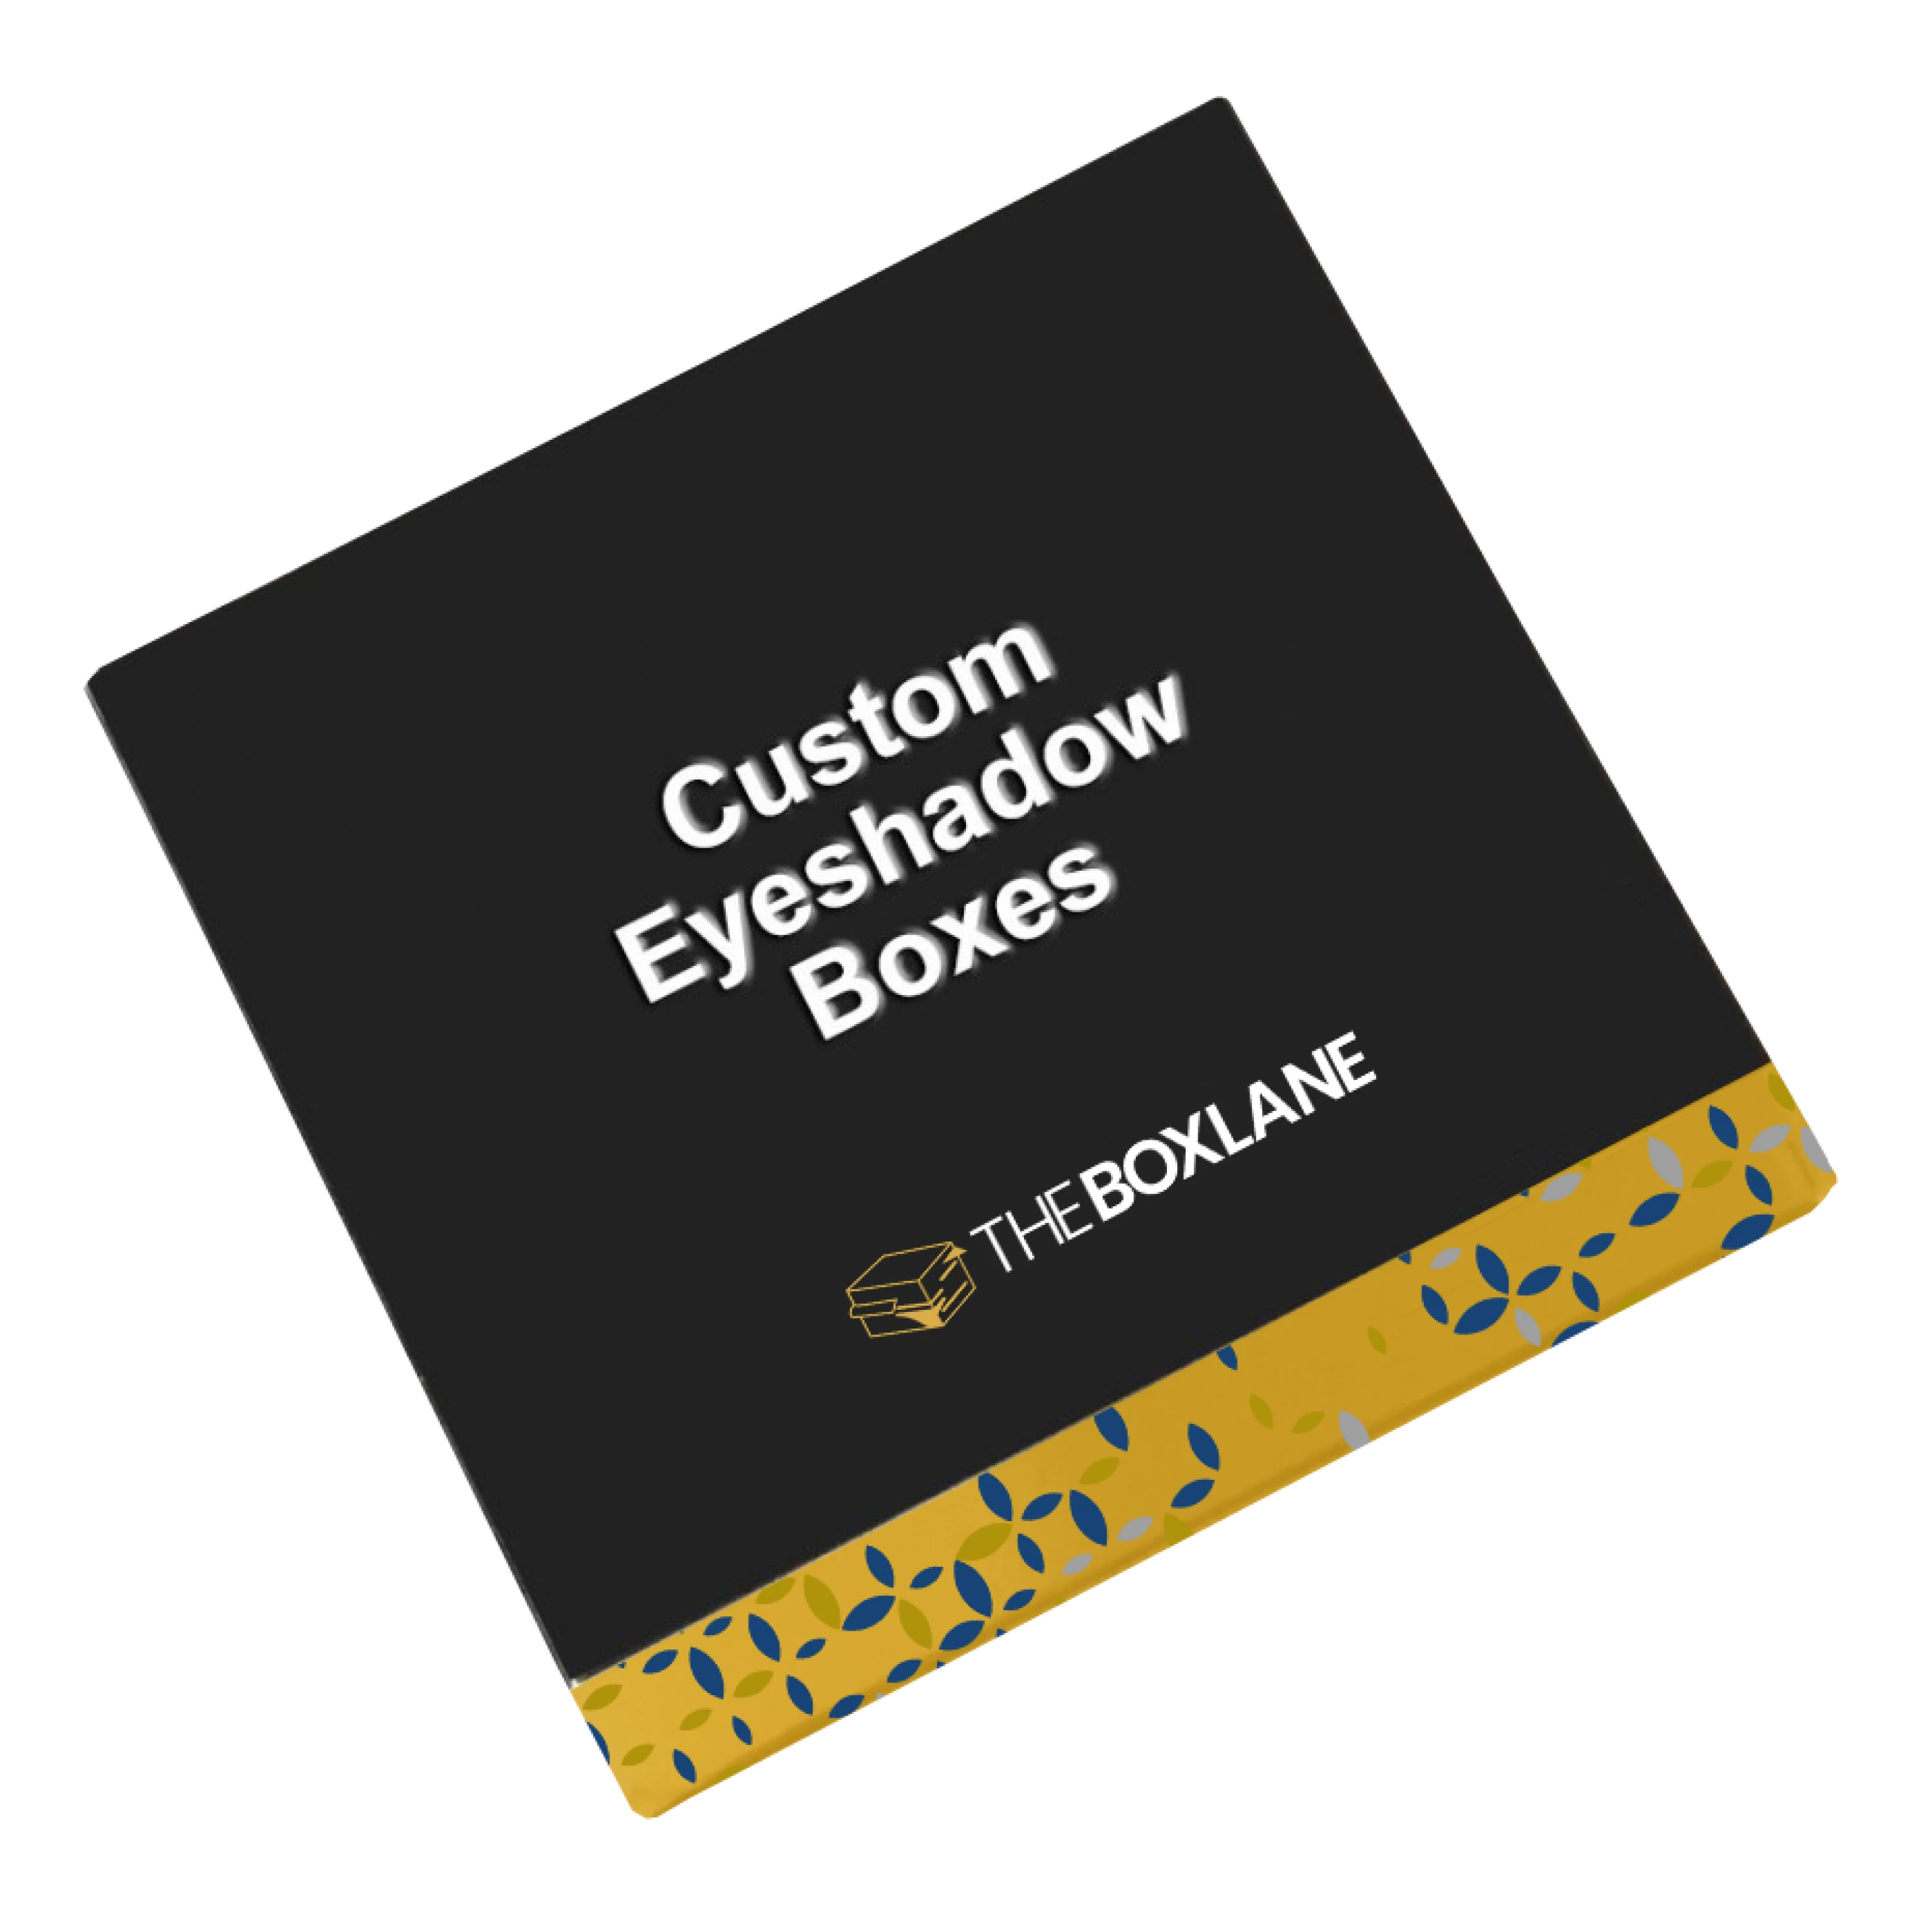 Carousel Custom Eyeshadow Boxes image 2 | The Box Lane